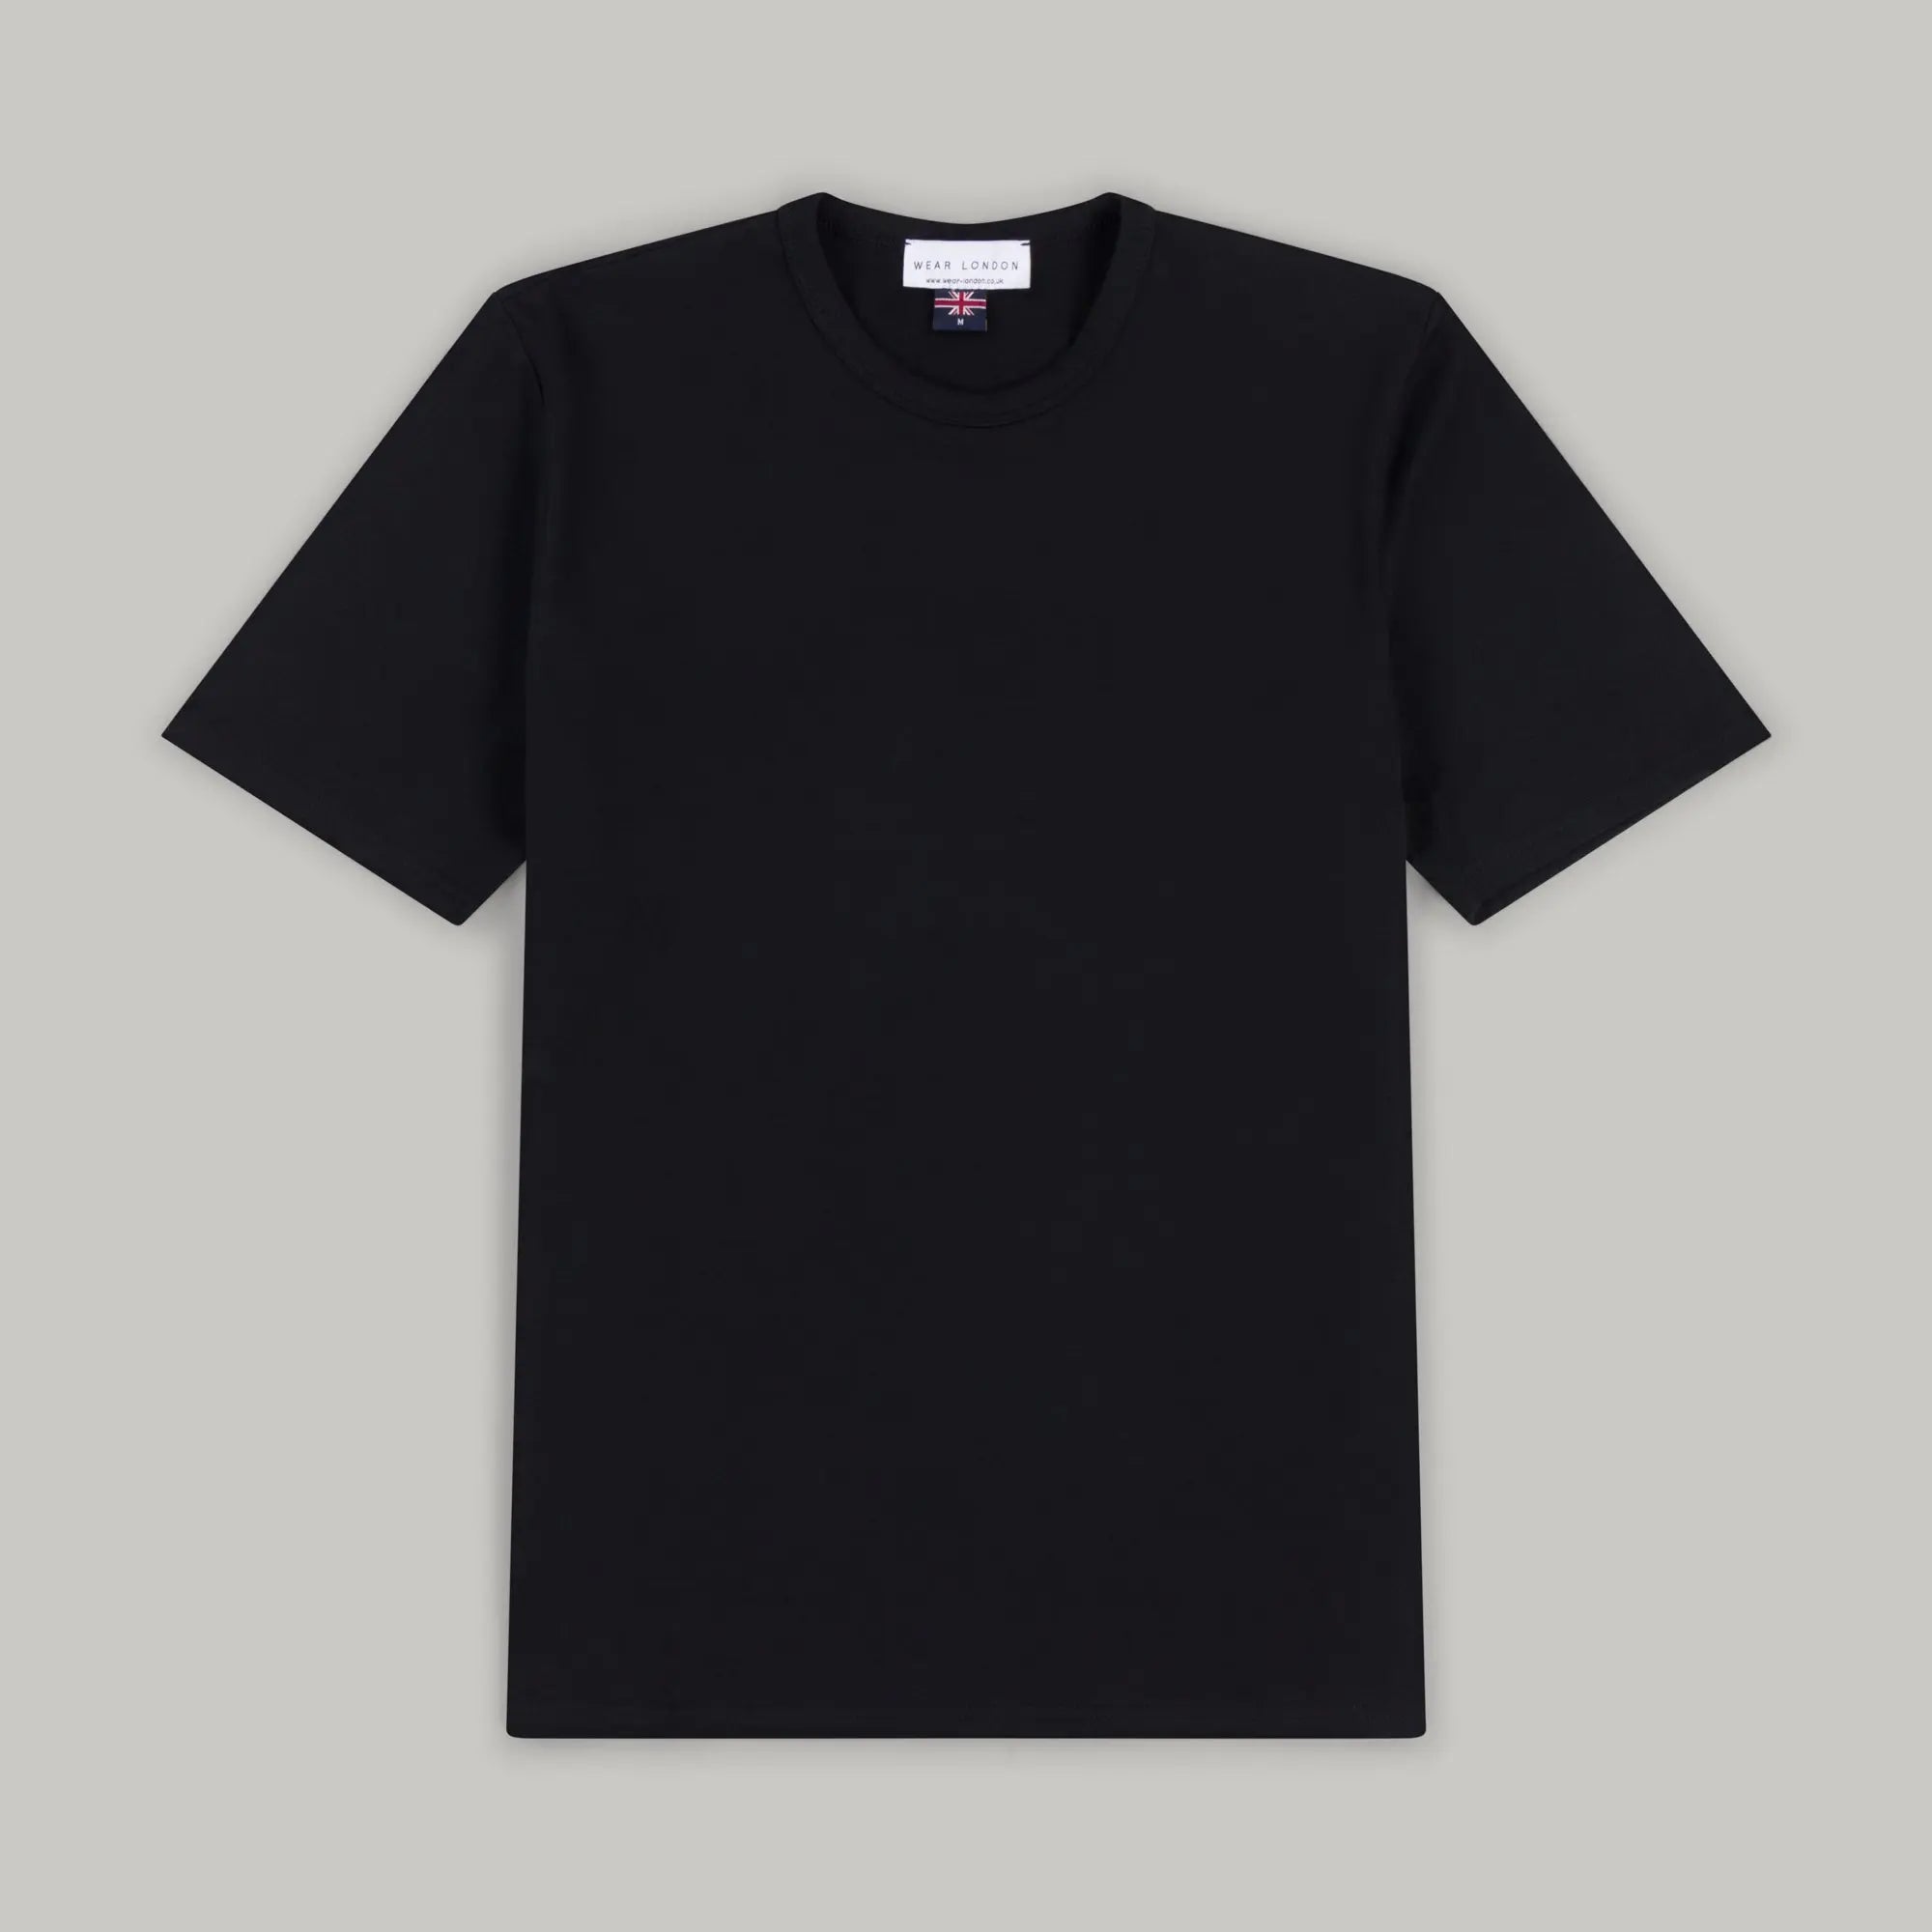 Trueman Short Sleeve Tee Shirt - Black Wear London